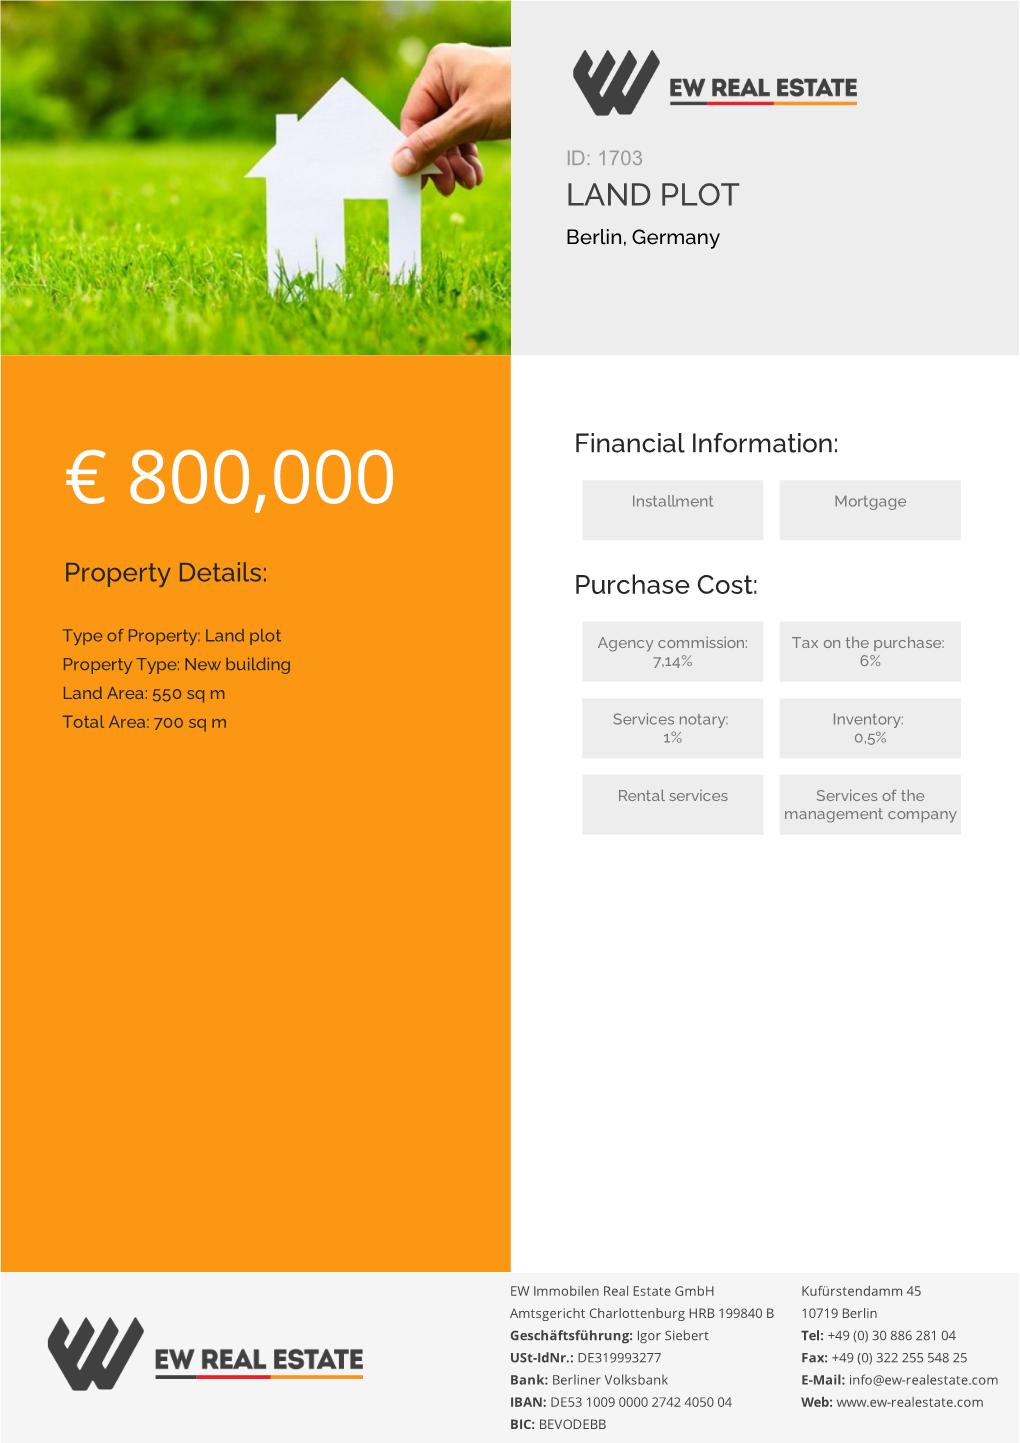 € 800,000 Installment Mortgage